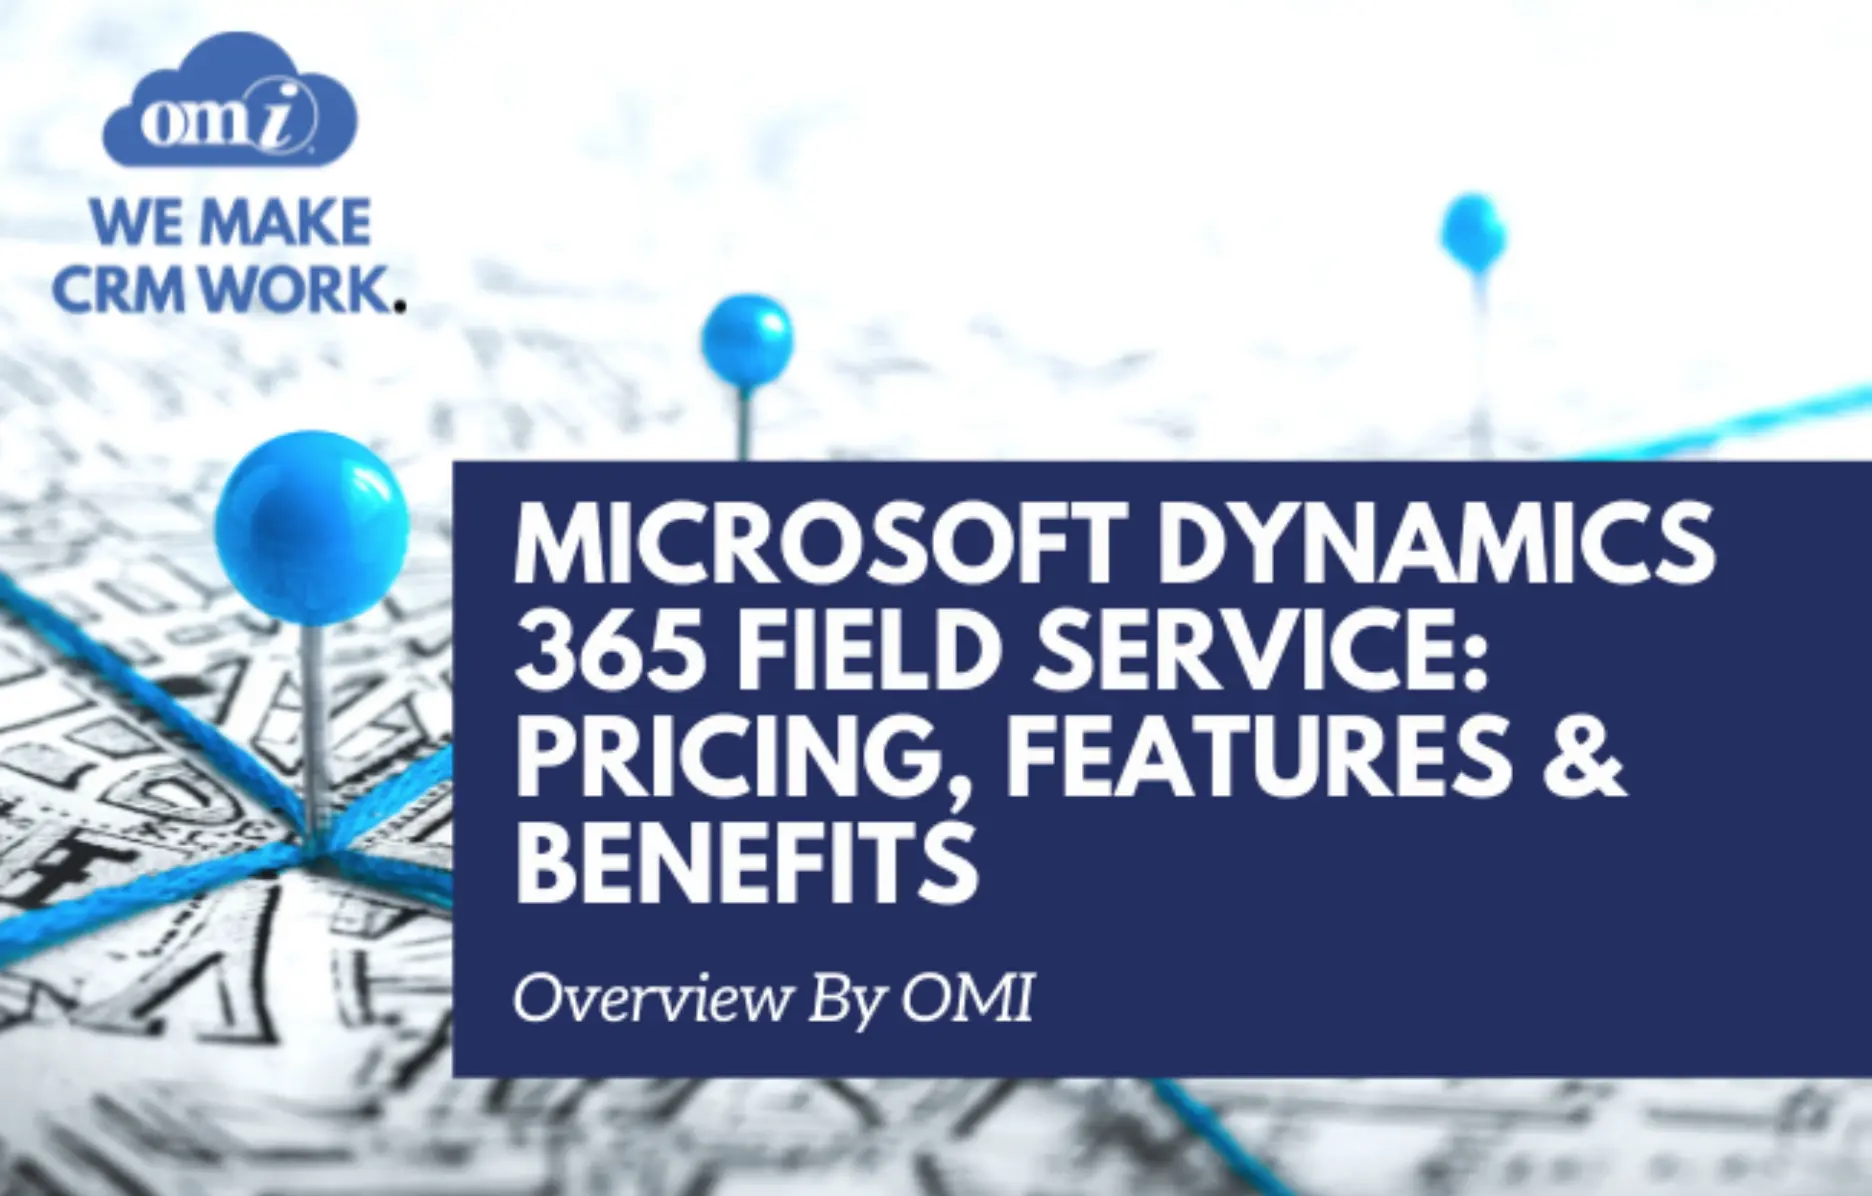 Microsoft Dynamics 365 Field Service Overview